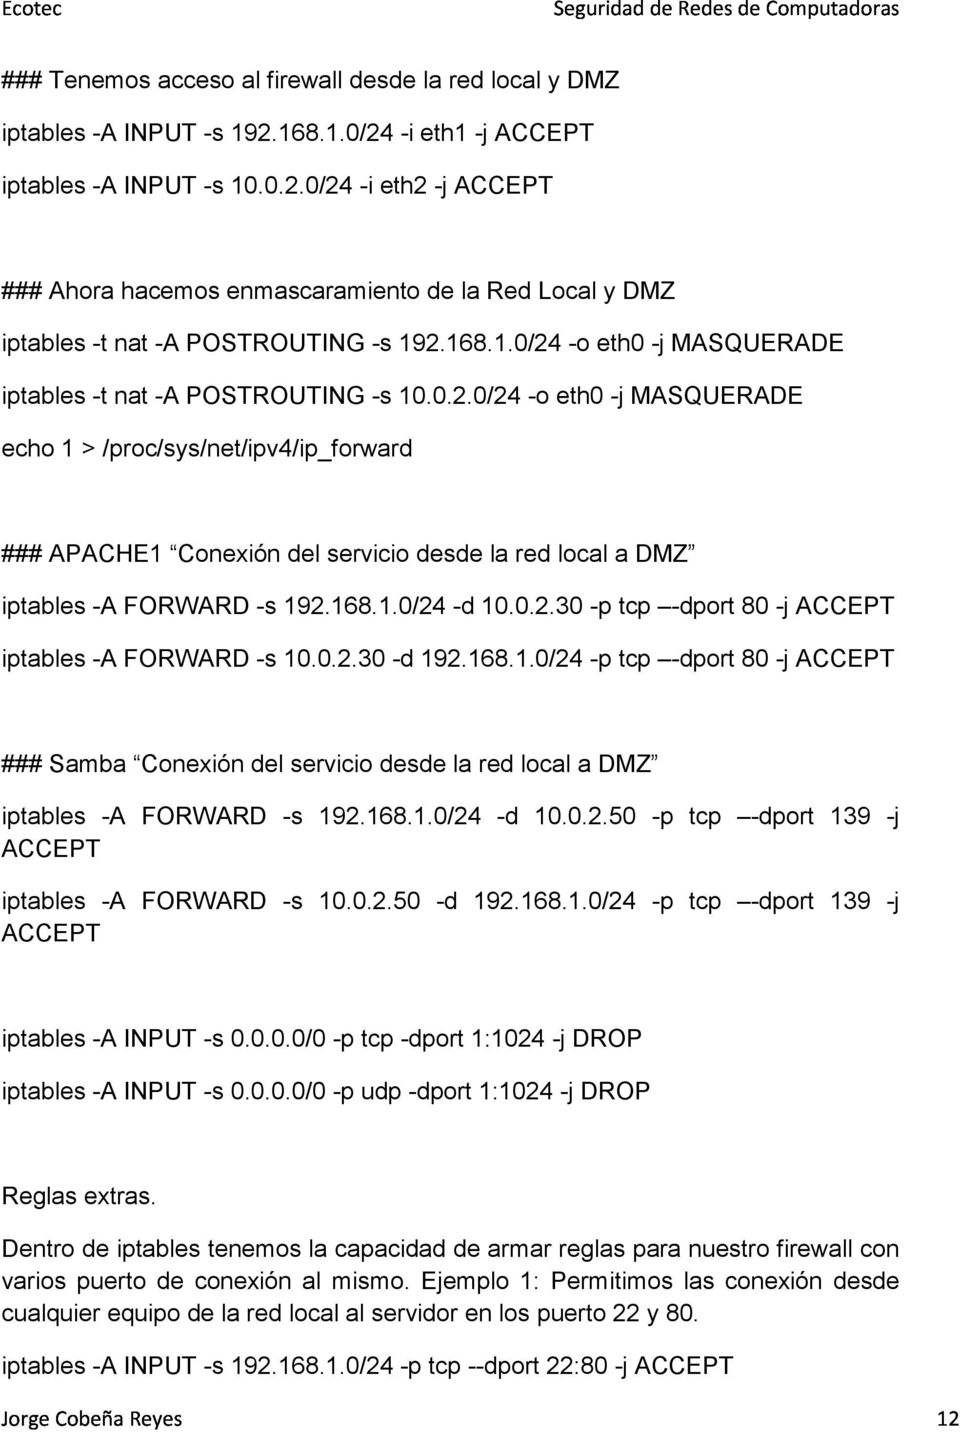 168.1.0/24 -d 10.0.2.30 -p tcp -dport 80 -j ACCEPT iptables -A FORWARD -s 10.0.2.30 -d 192.168.1.0/24 -p tcp -dport 80 -j ACCEPT ### Samba Conexión del servicio desde la red local a DMZ iptables -A FORWARD -s 192.